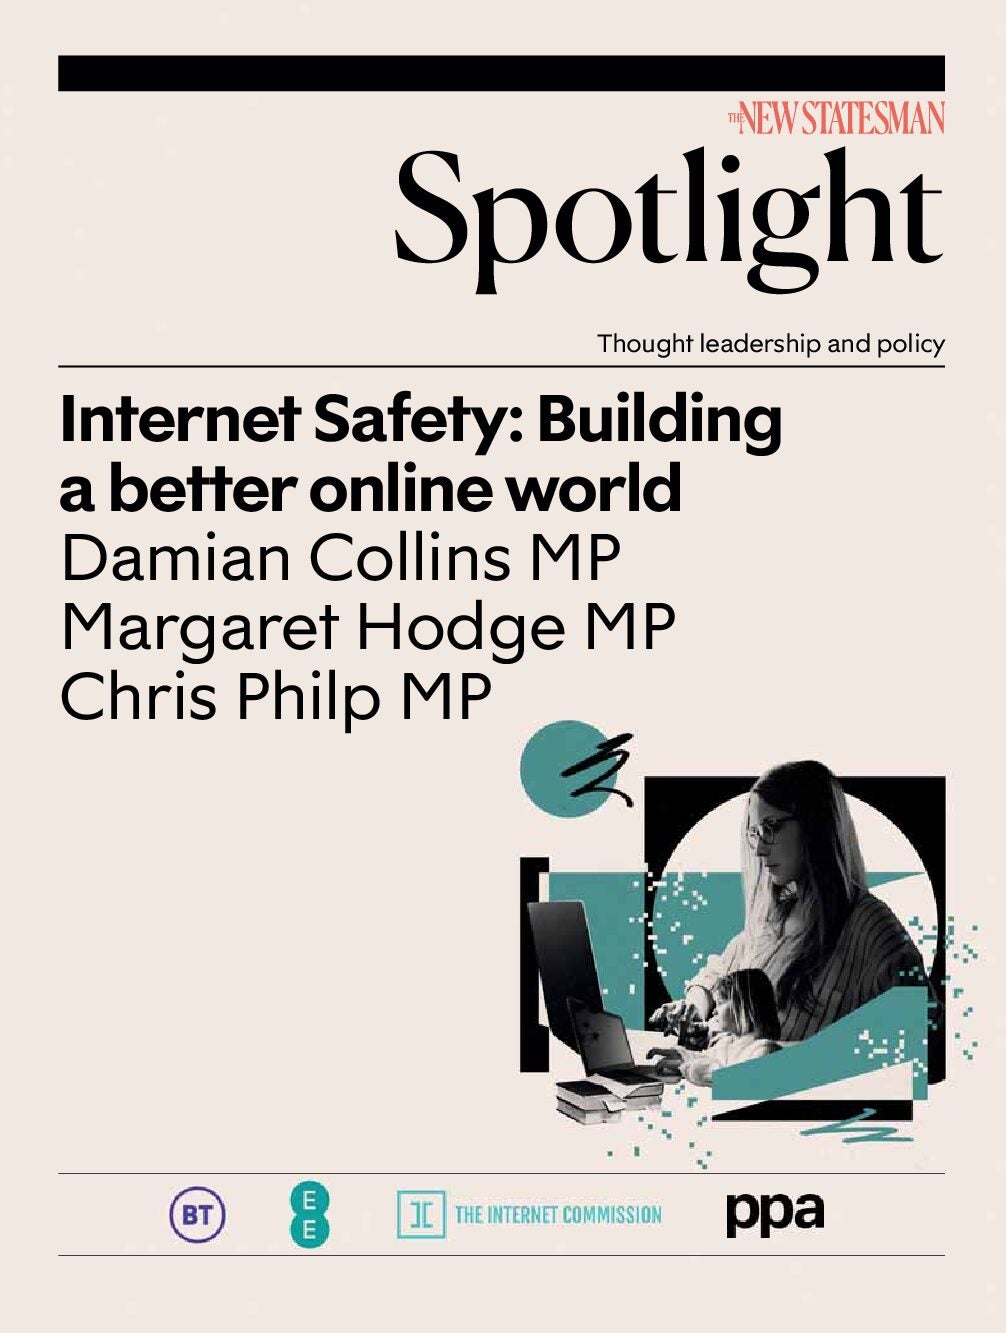 Internet Safety: Building a better online world